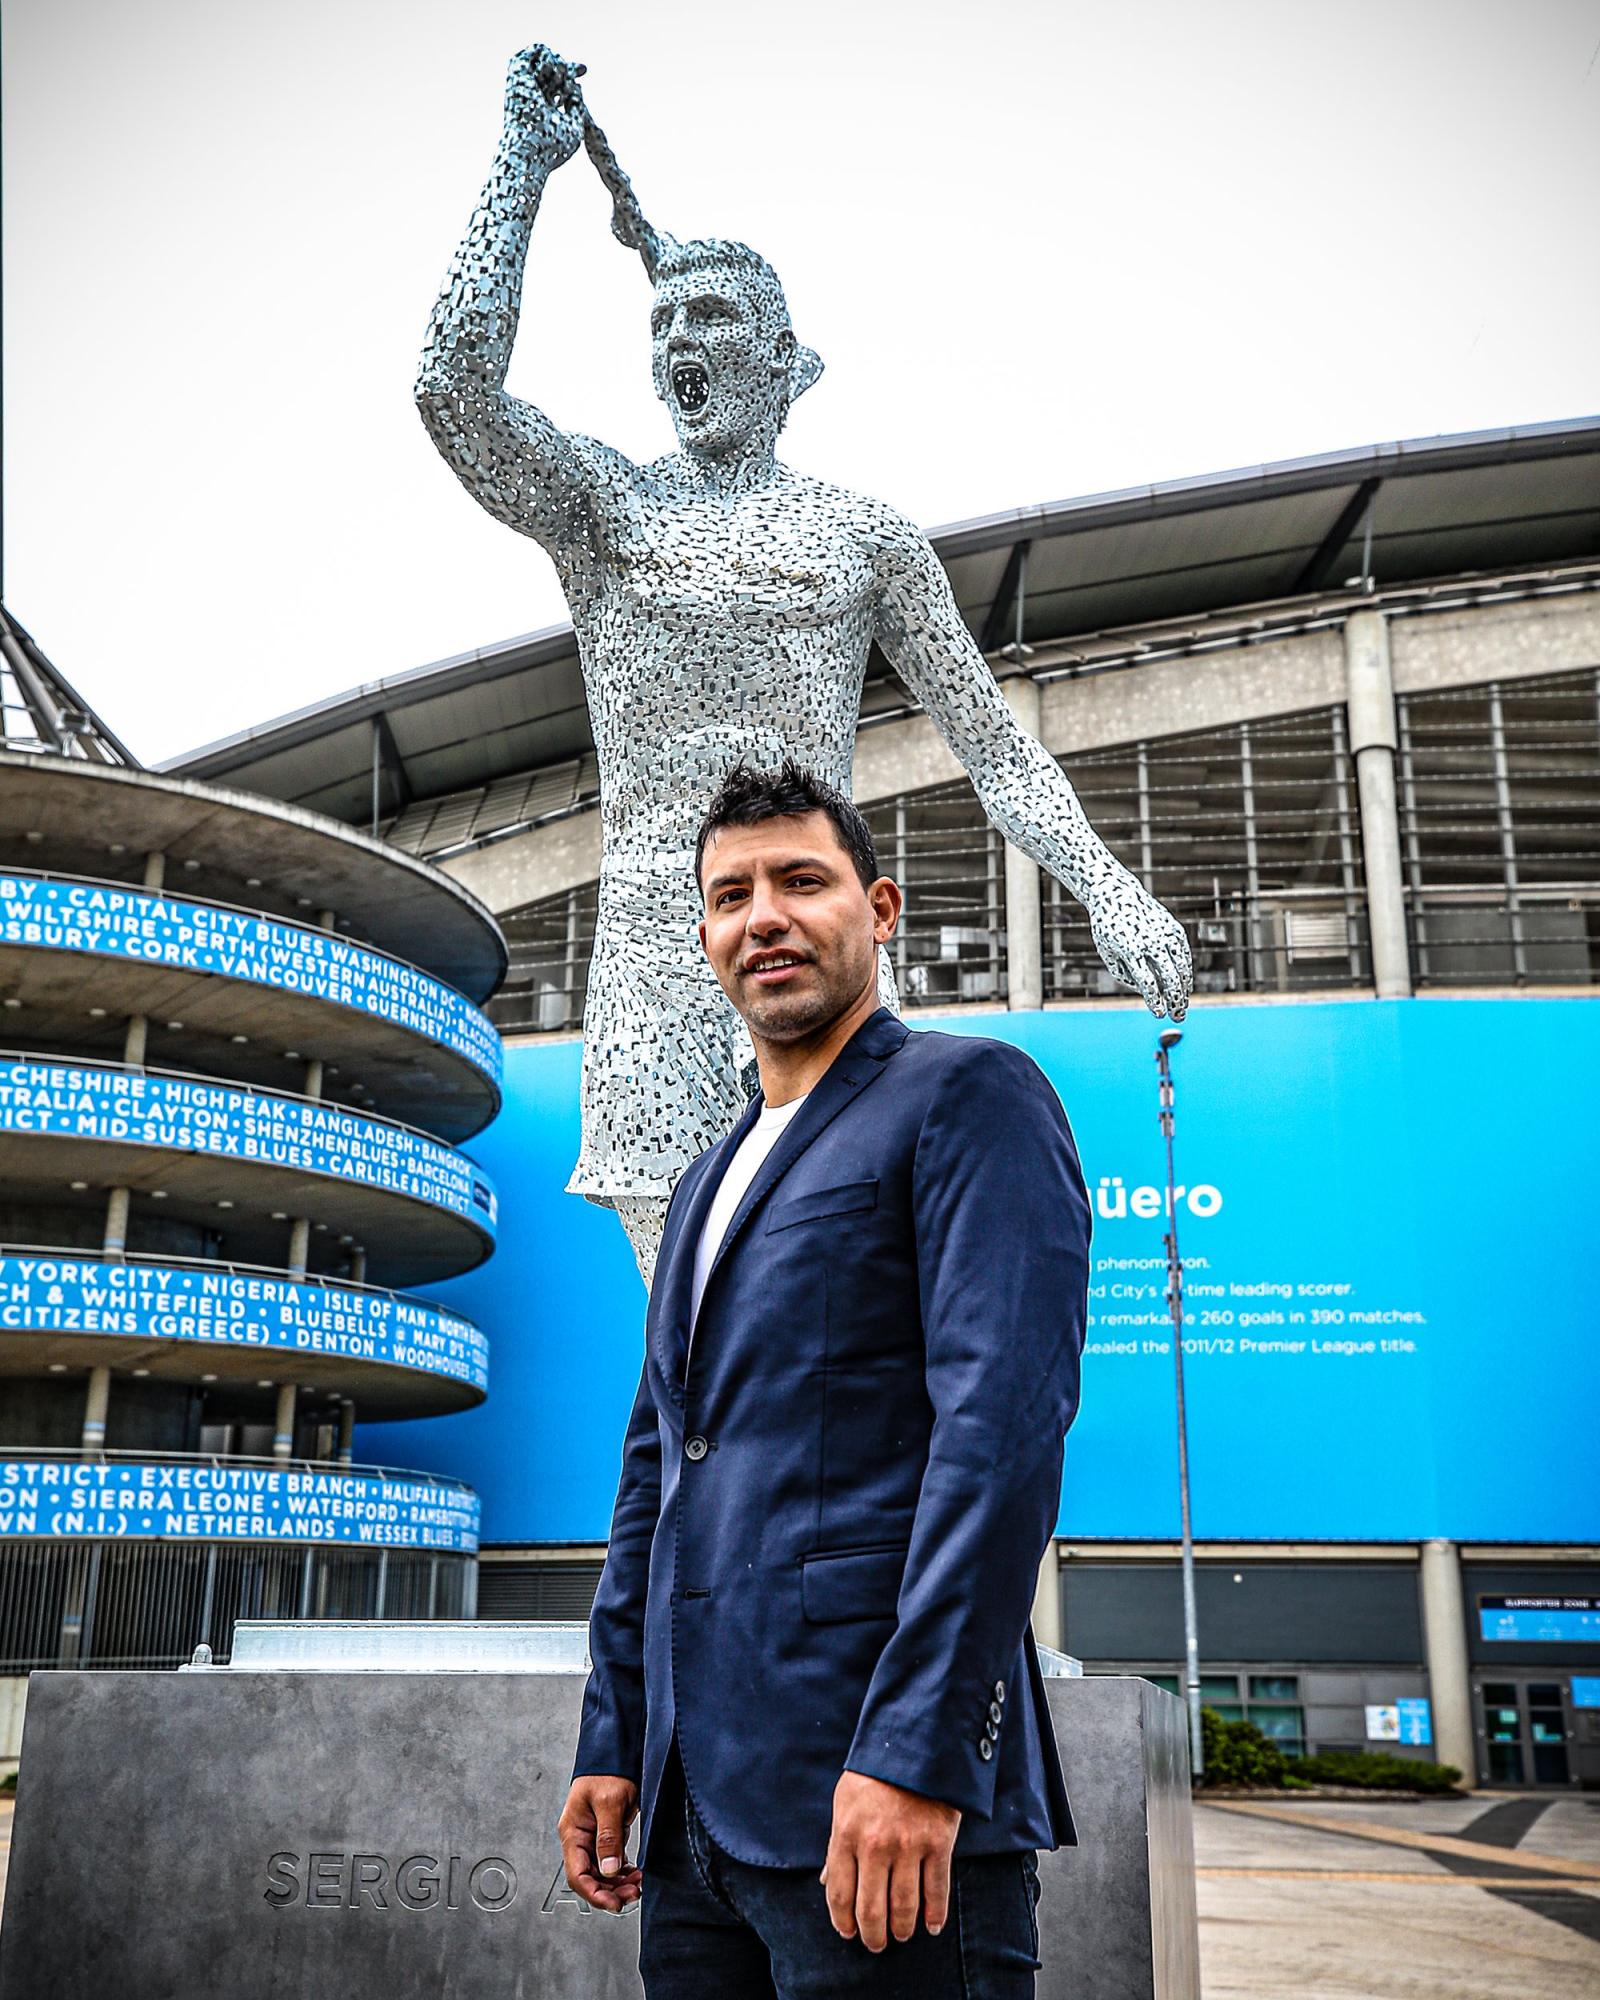 ¿Se parece a jugador del Real Madrid? Así es la estatua del Manchester City en honor al Kun Agüero